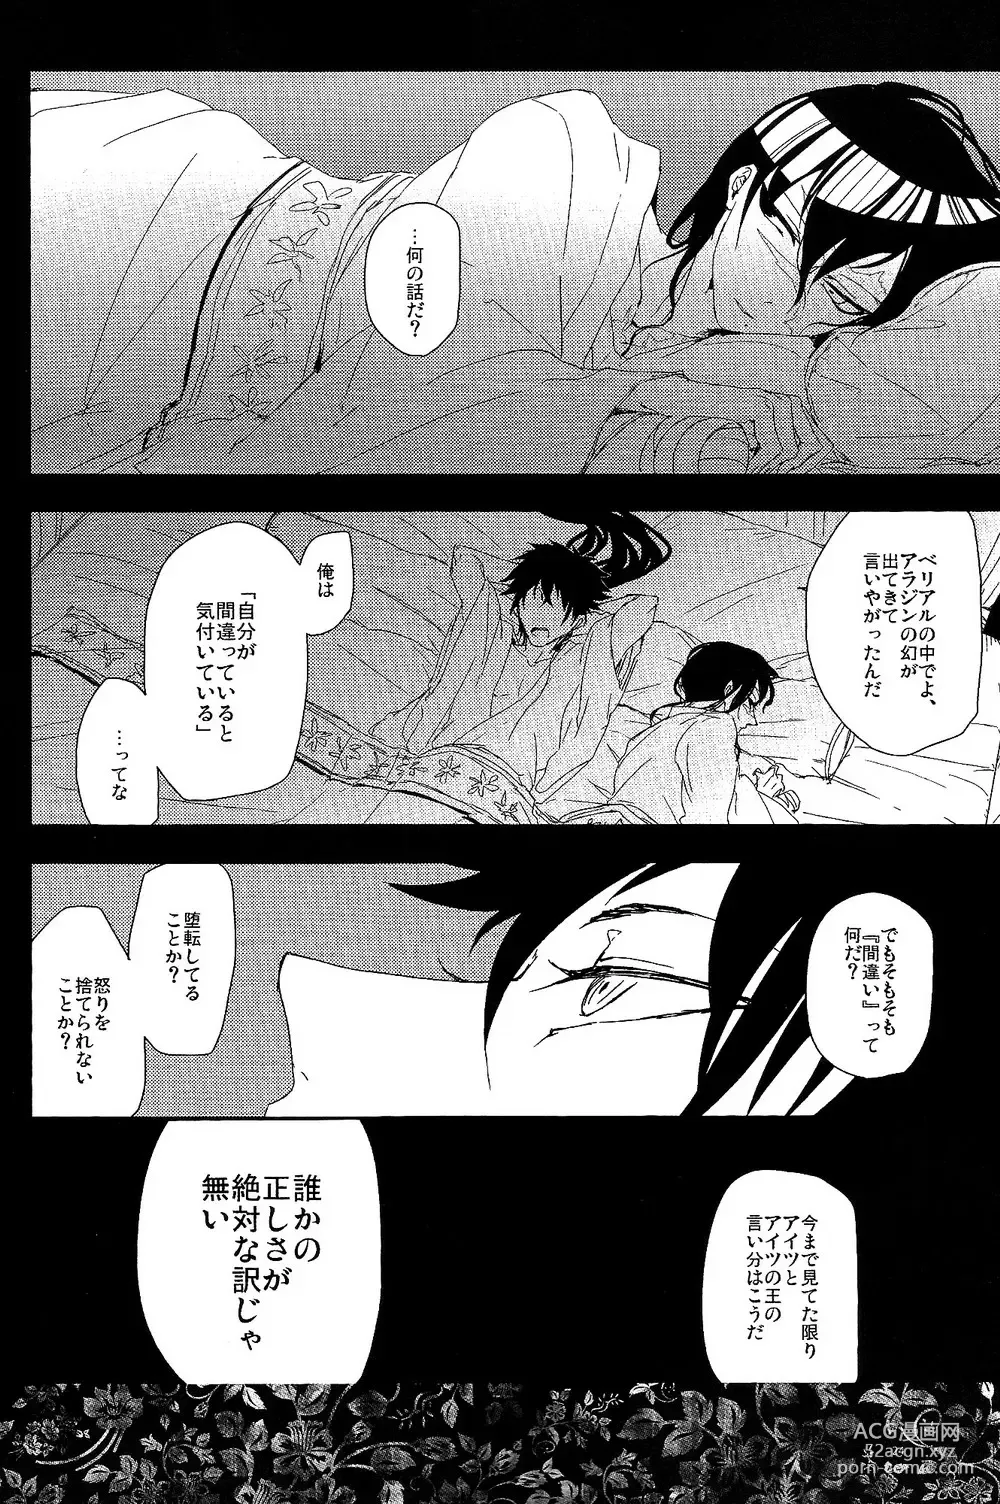 Page 23 of doujinshi GOLDEN ERROR